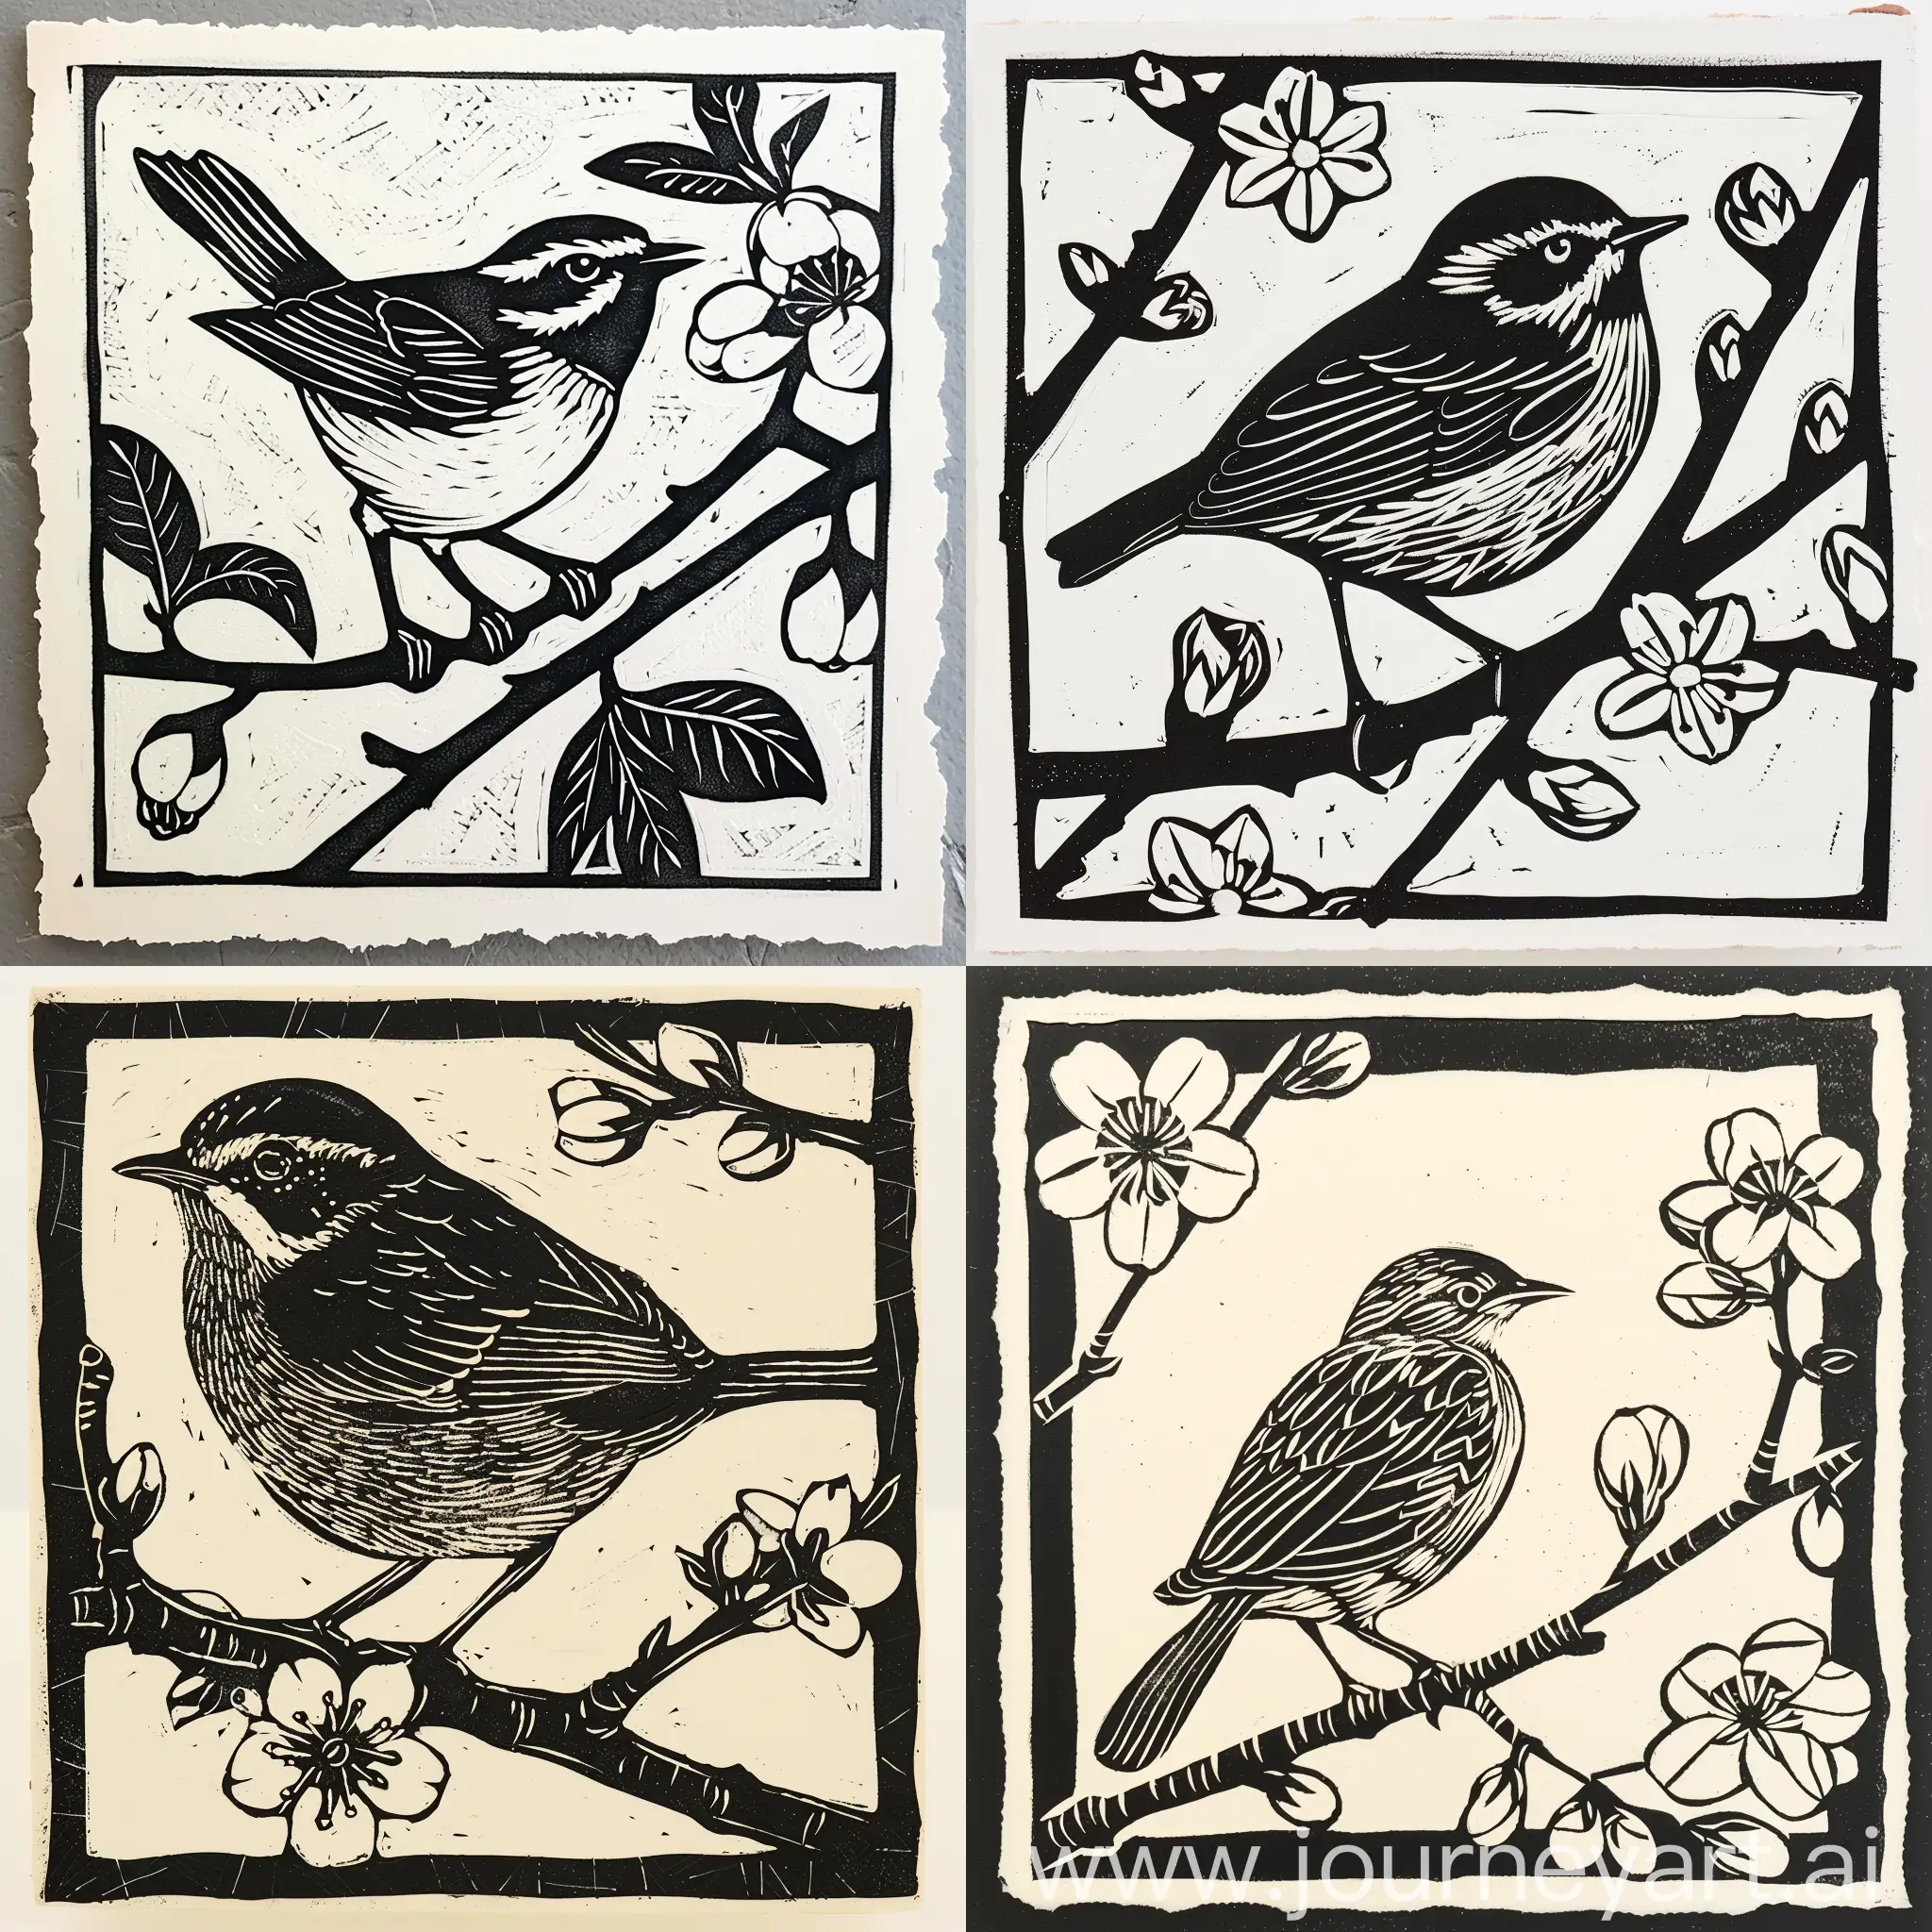 Linocut Block Print Minimalism, bird and blossoms